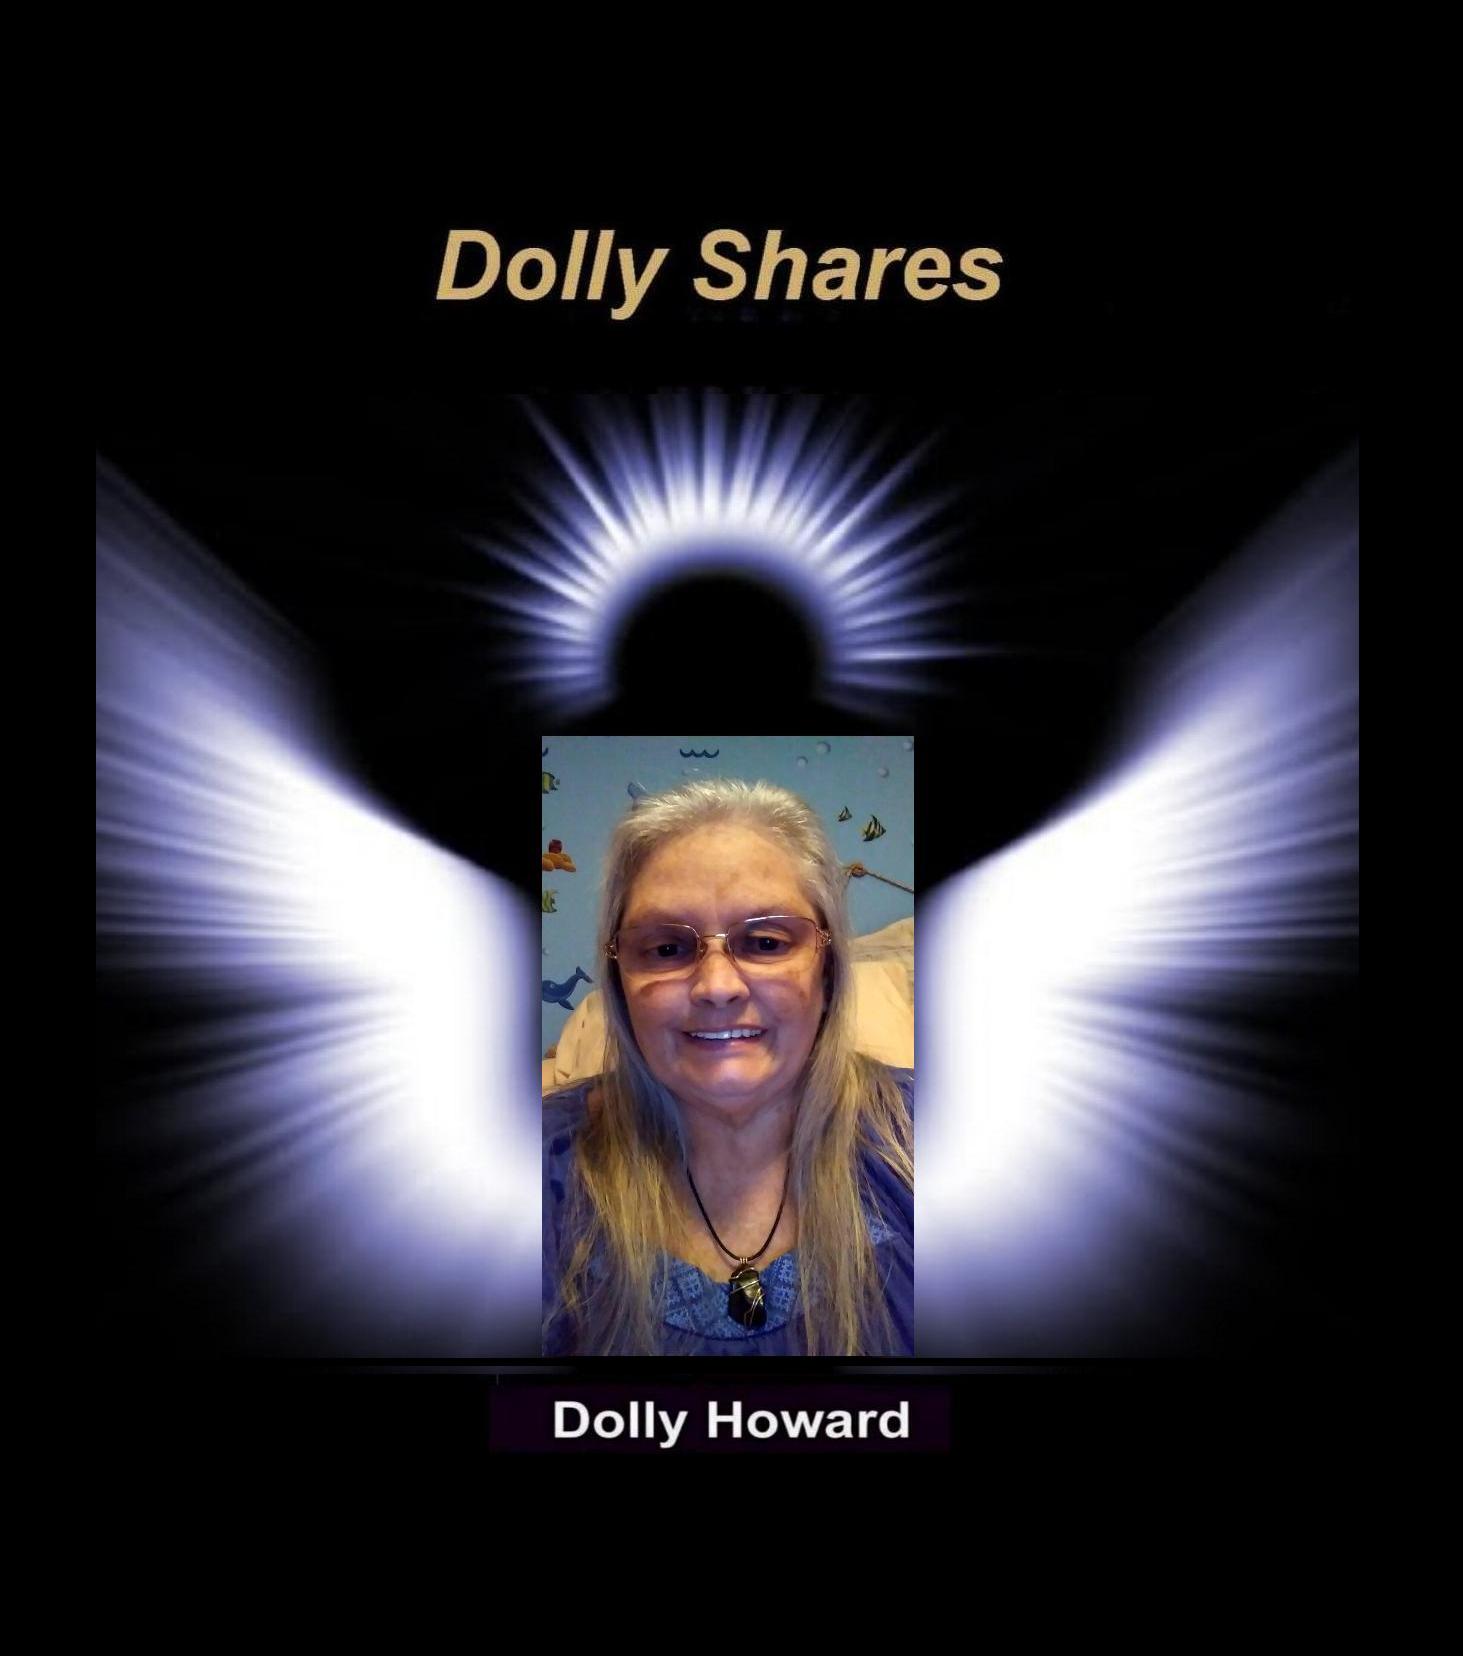 DOLLY SHARES - Dolly Howard - Hospital Thank You from 10-23-19